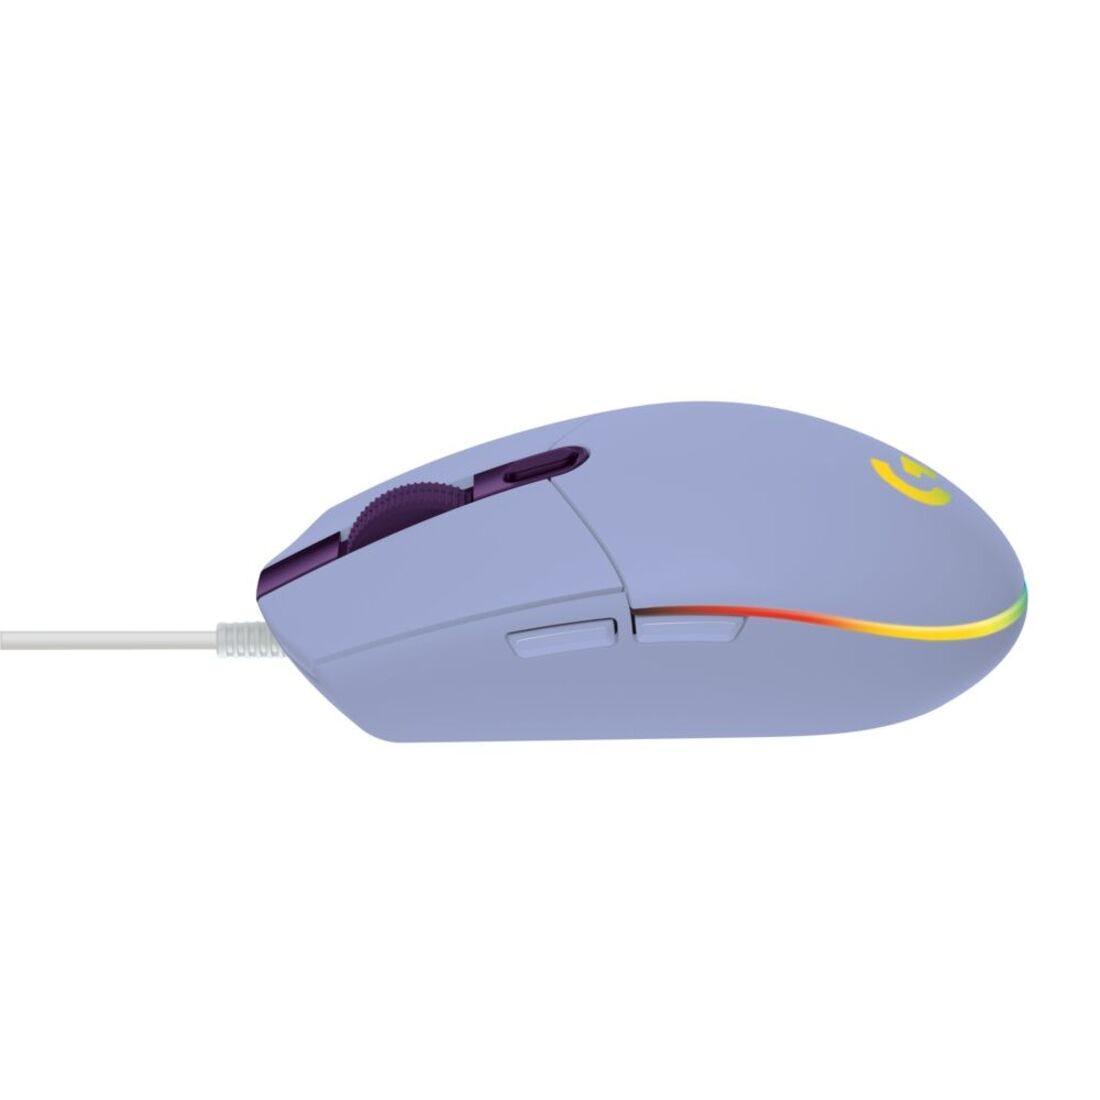 Mouse Gamer Logitech G203 com LightSync USB Lilás - 910-005852 - Mega Market